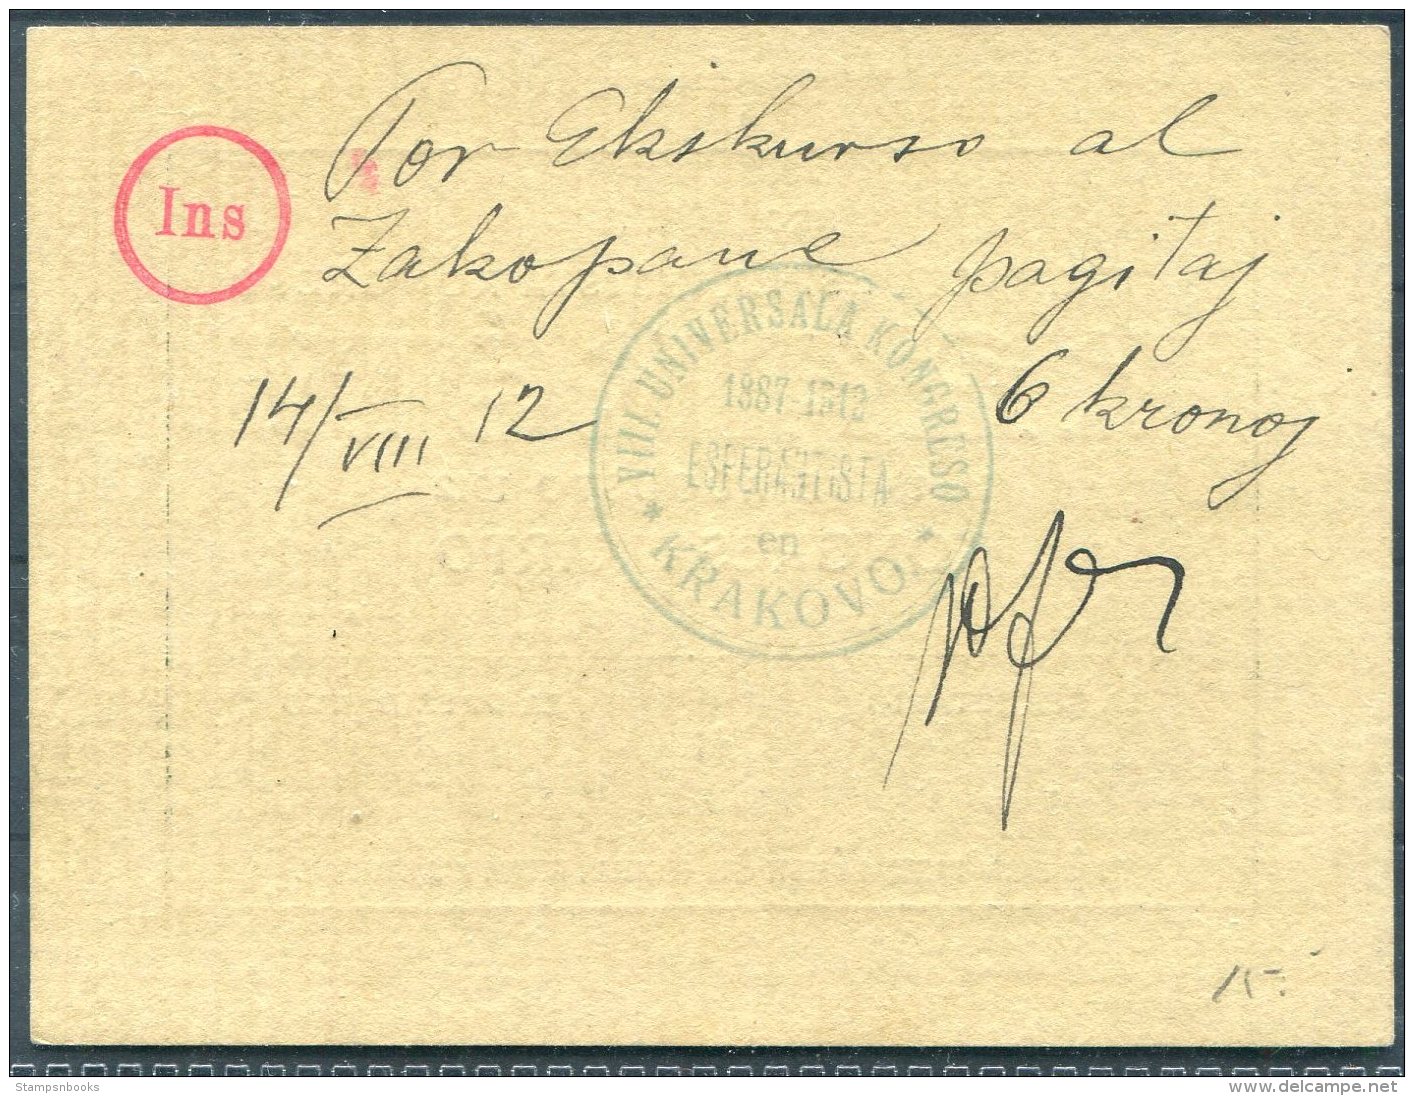 1912 Esperanto Congress Ticket Krakow Poland - Tickets - Vouchers